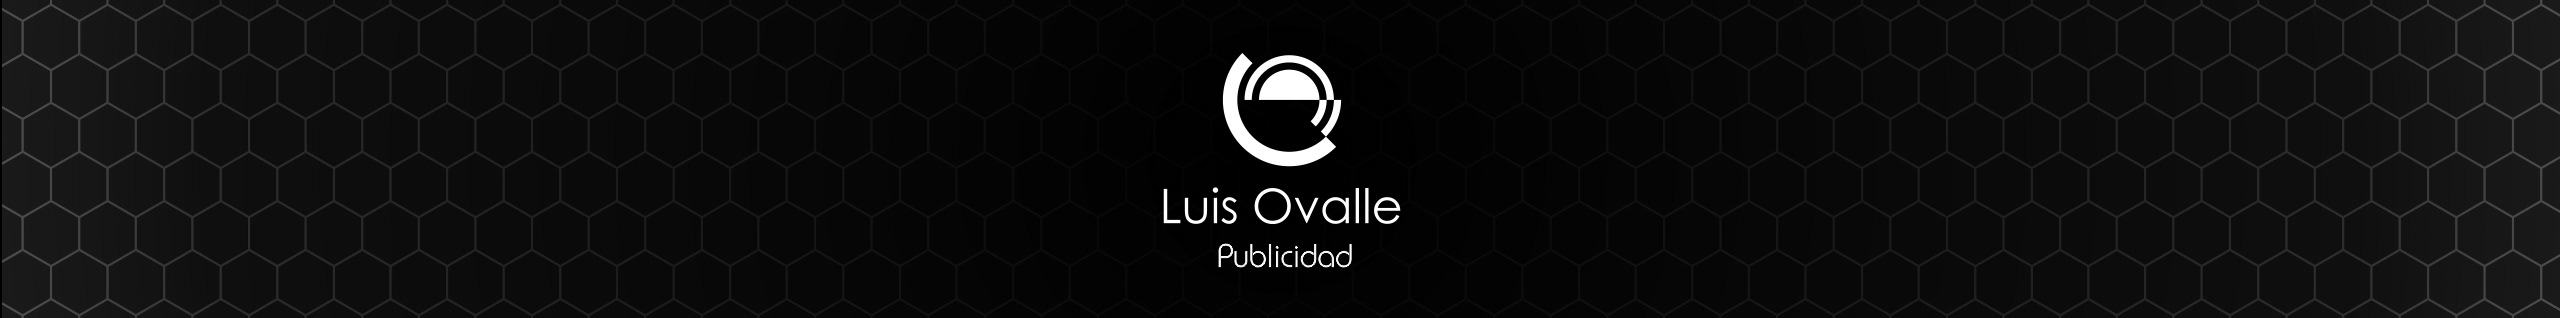 Luis Ovalle のプロファイルバナー